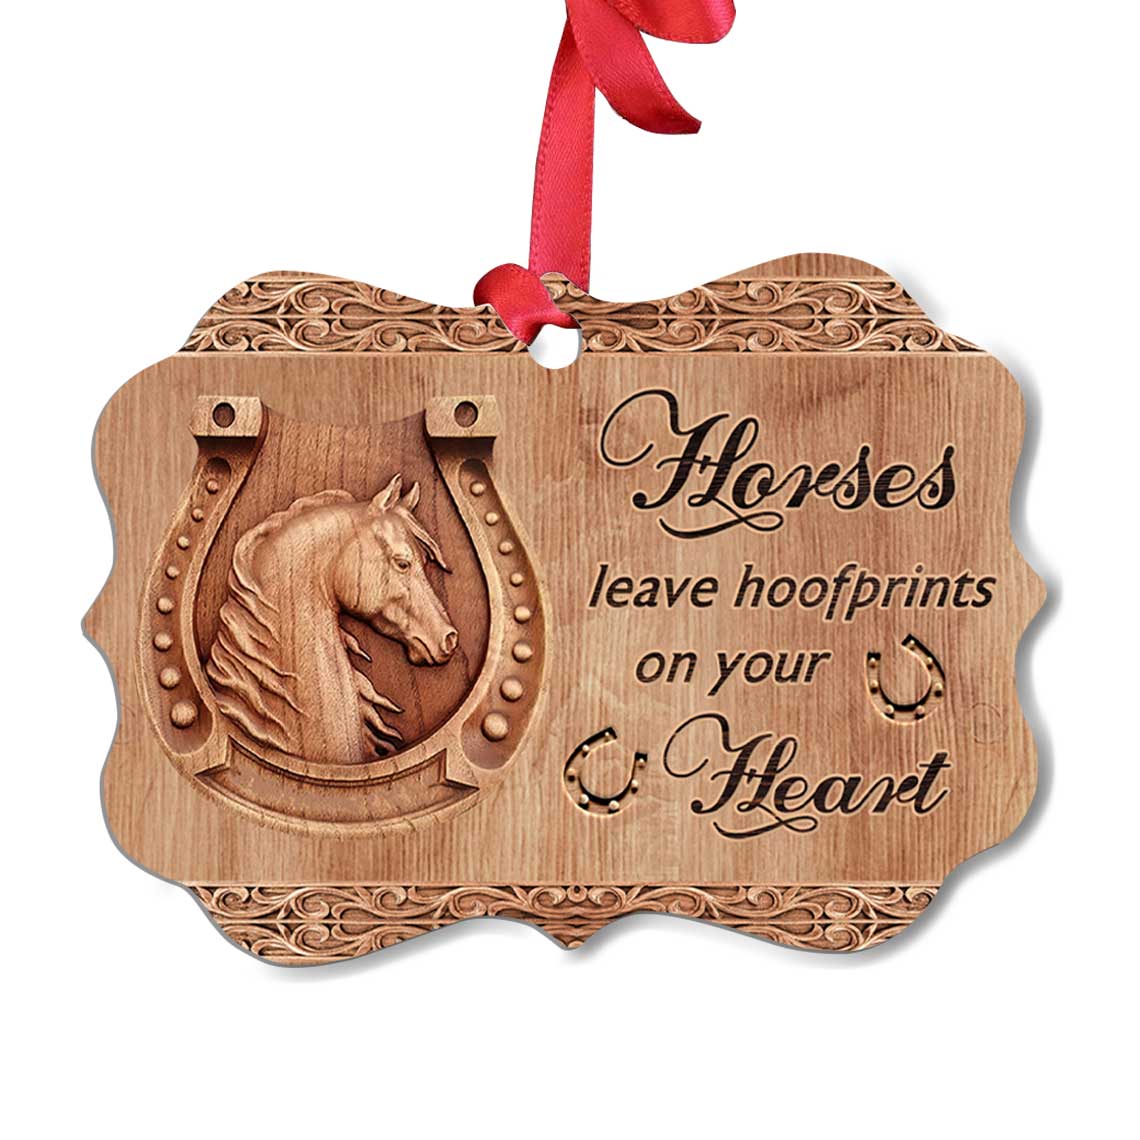 Horse Leave Hoofprint On Your Heart - Horizontal Ornament - Owls Matrix LTD